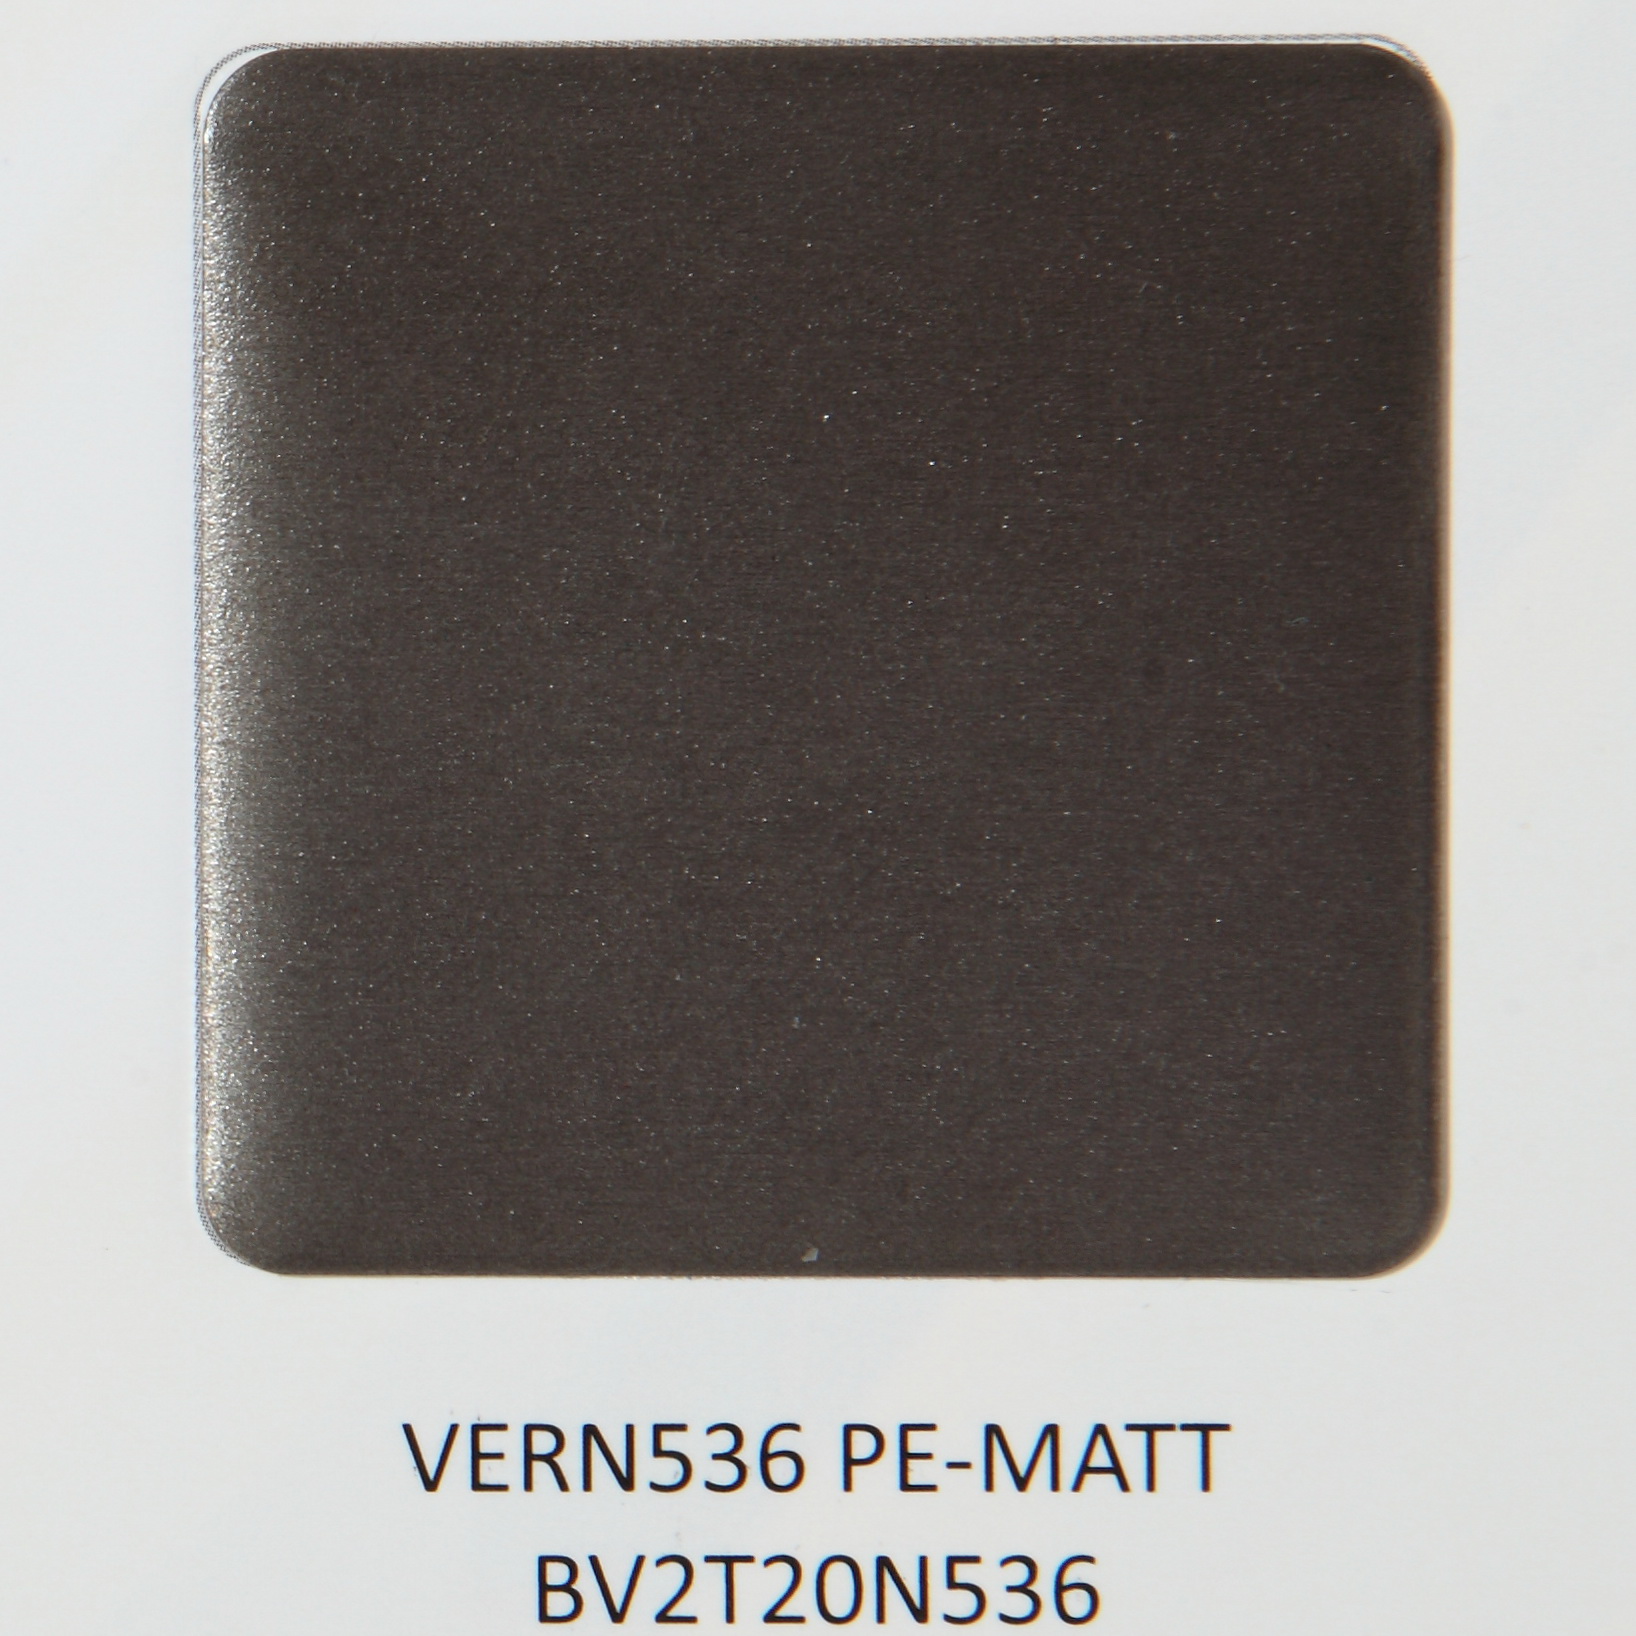 VERN536 PE MATT BV2T20N536